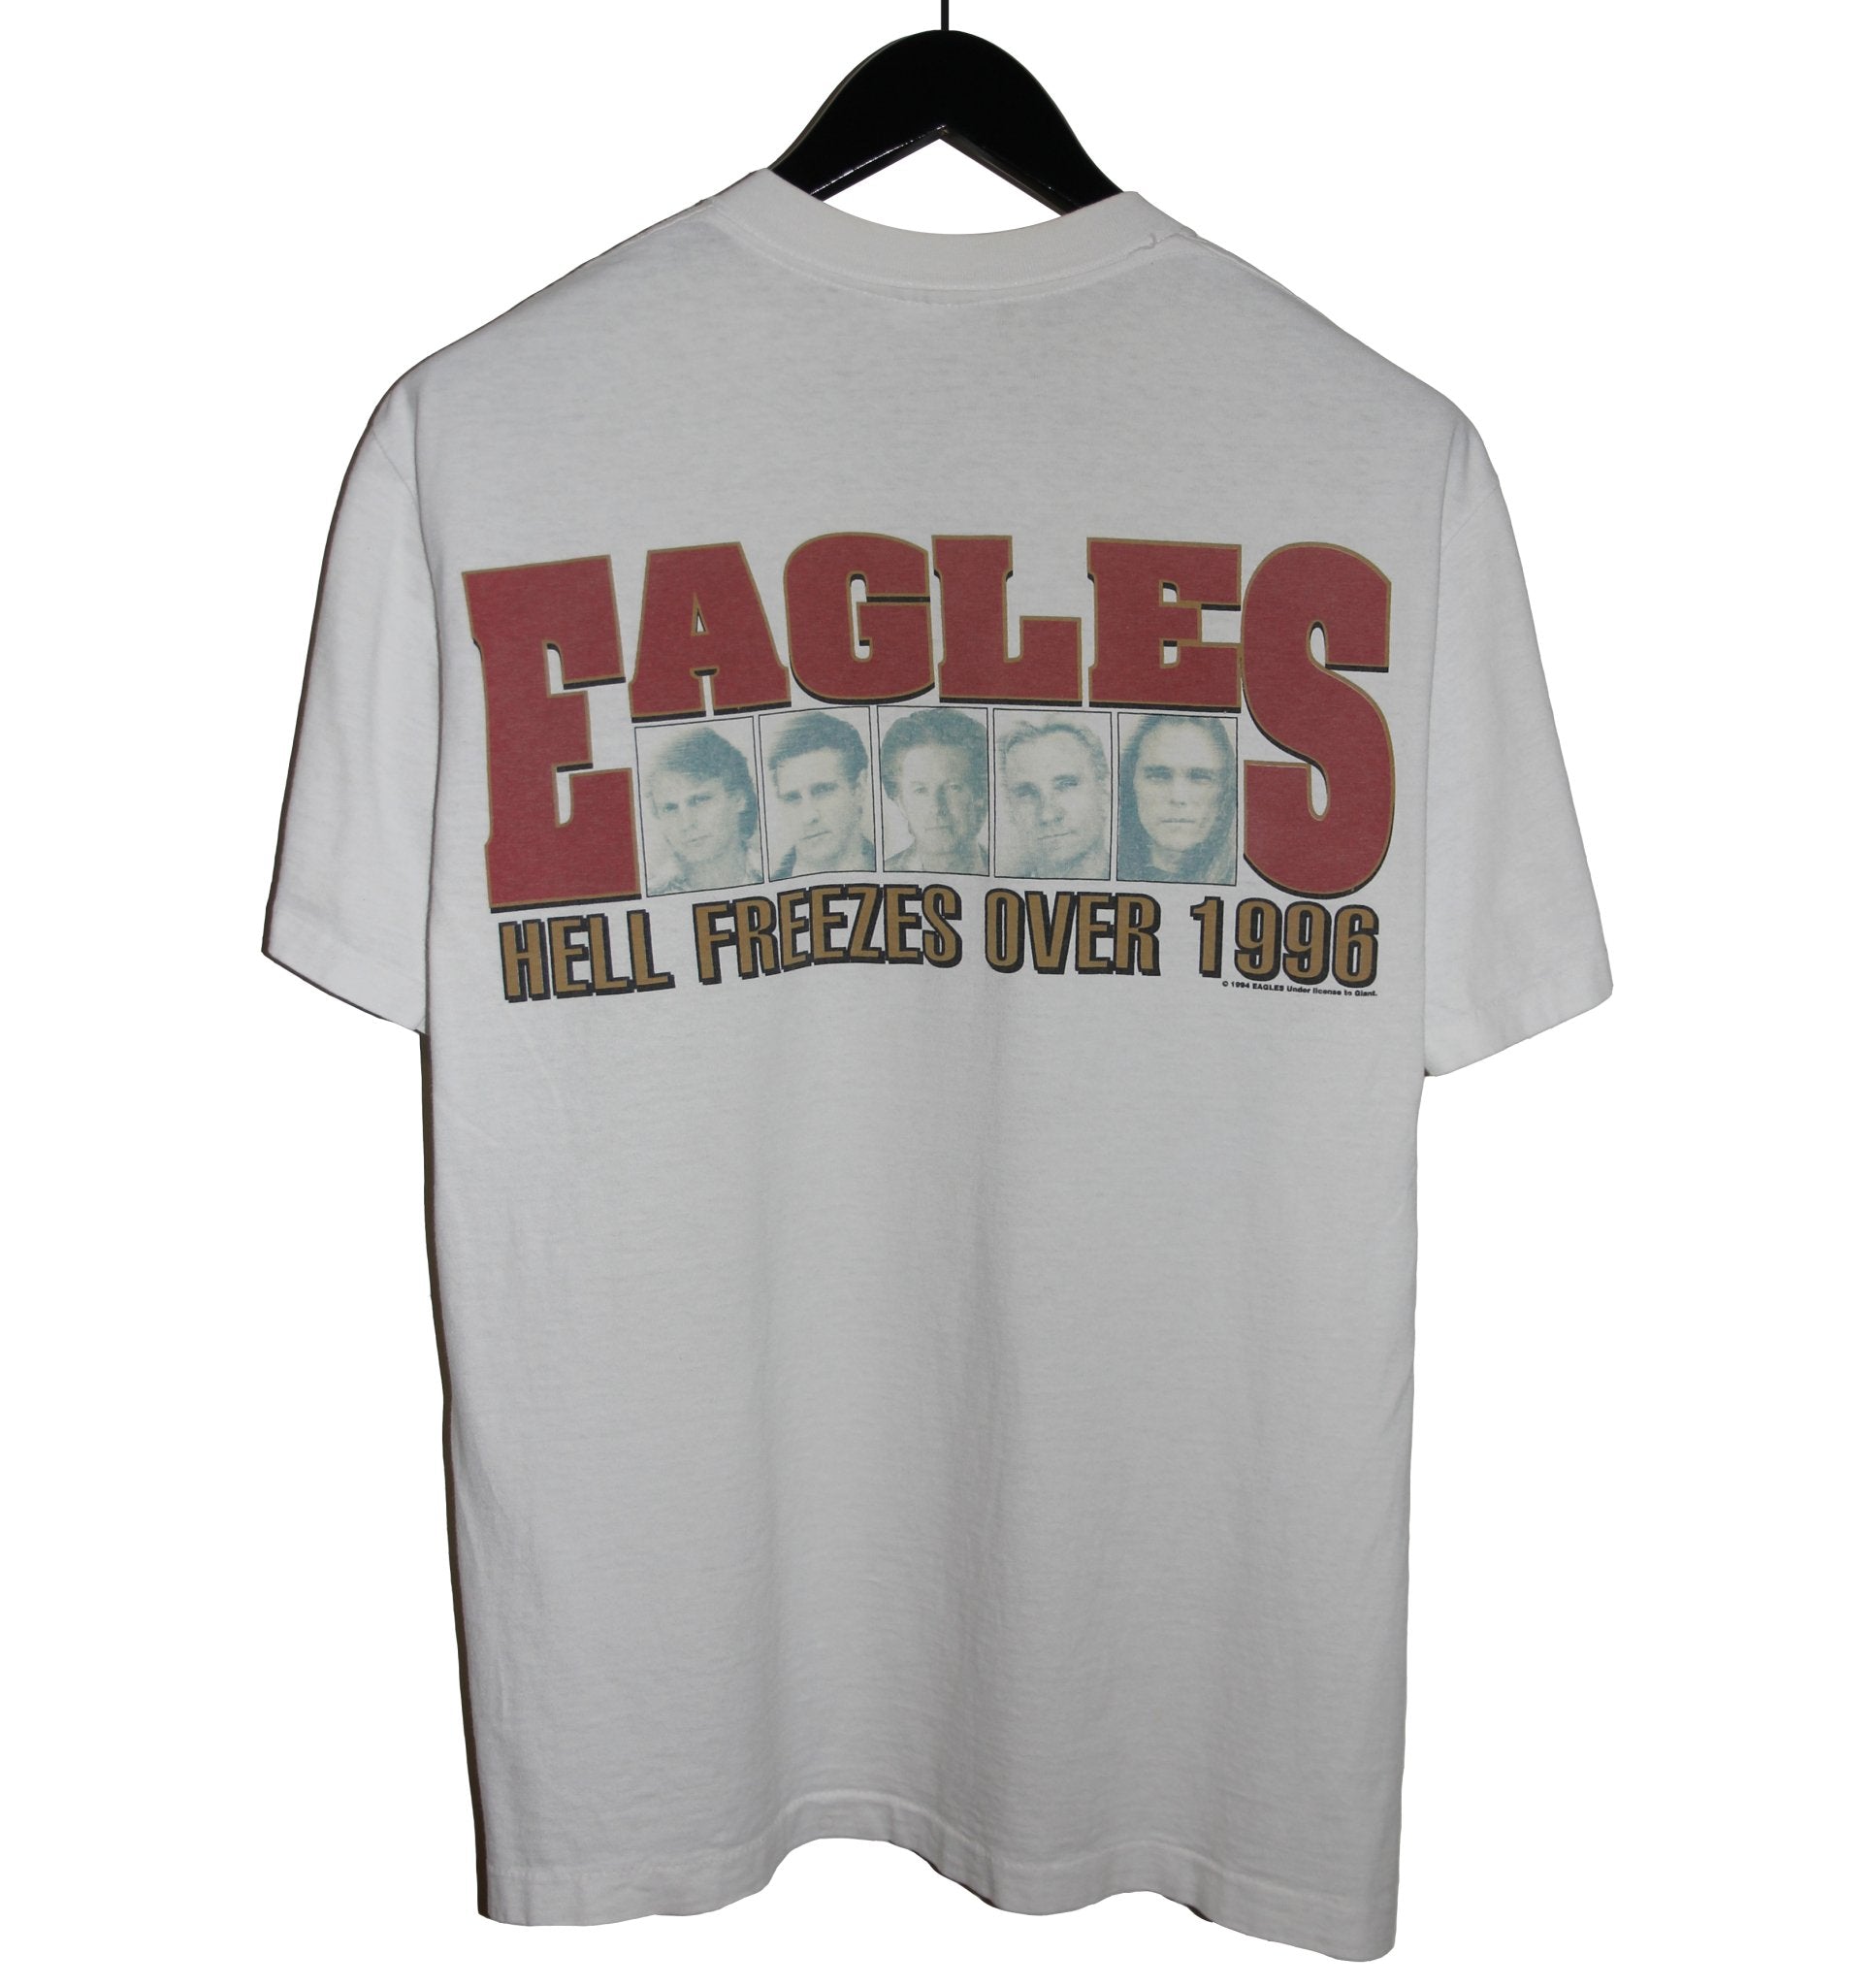 Eagles 1996 Hell Freezes Over Tour Shirt - Faded AU